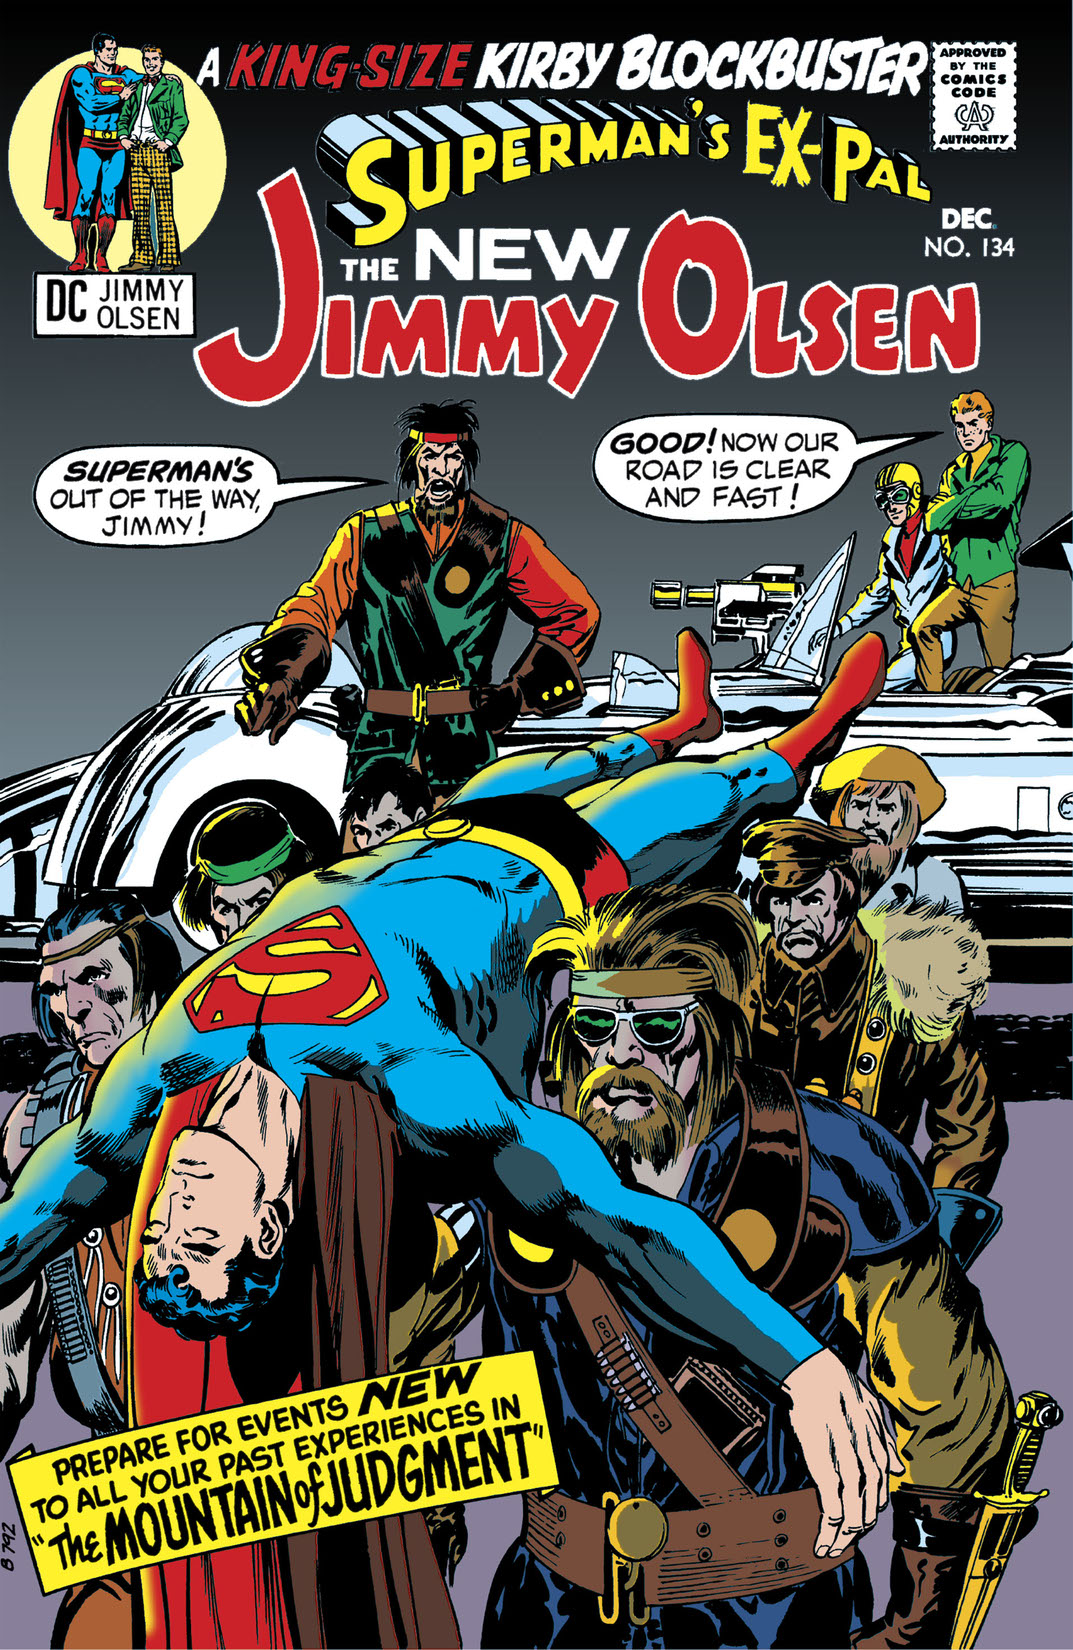 Superman's Pal, Jimmy Olsen #134 preview images